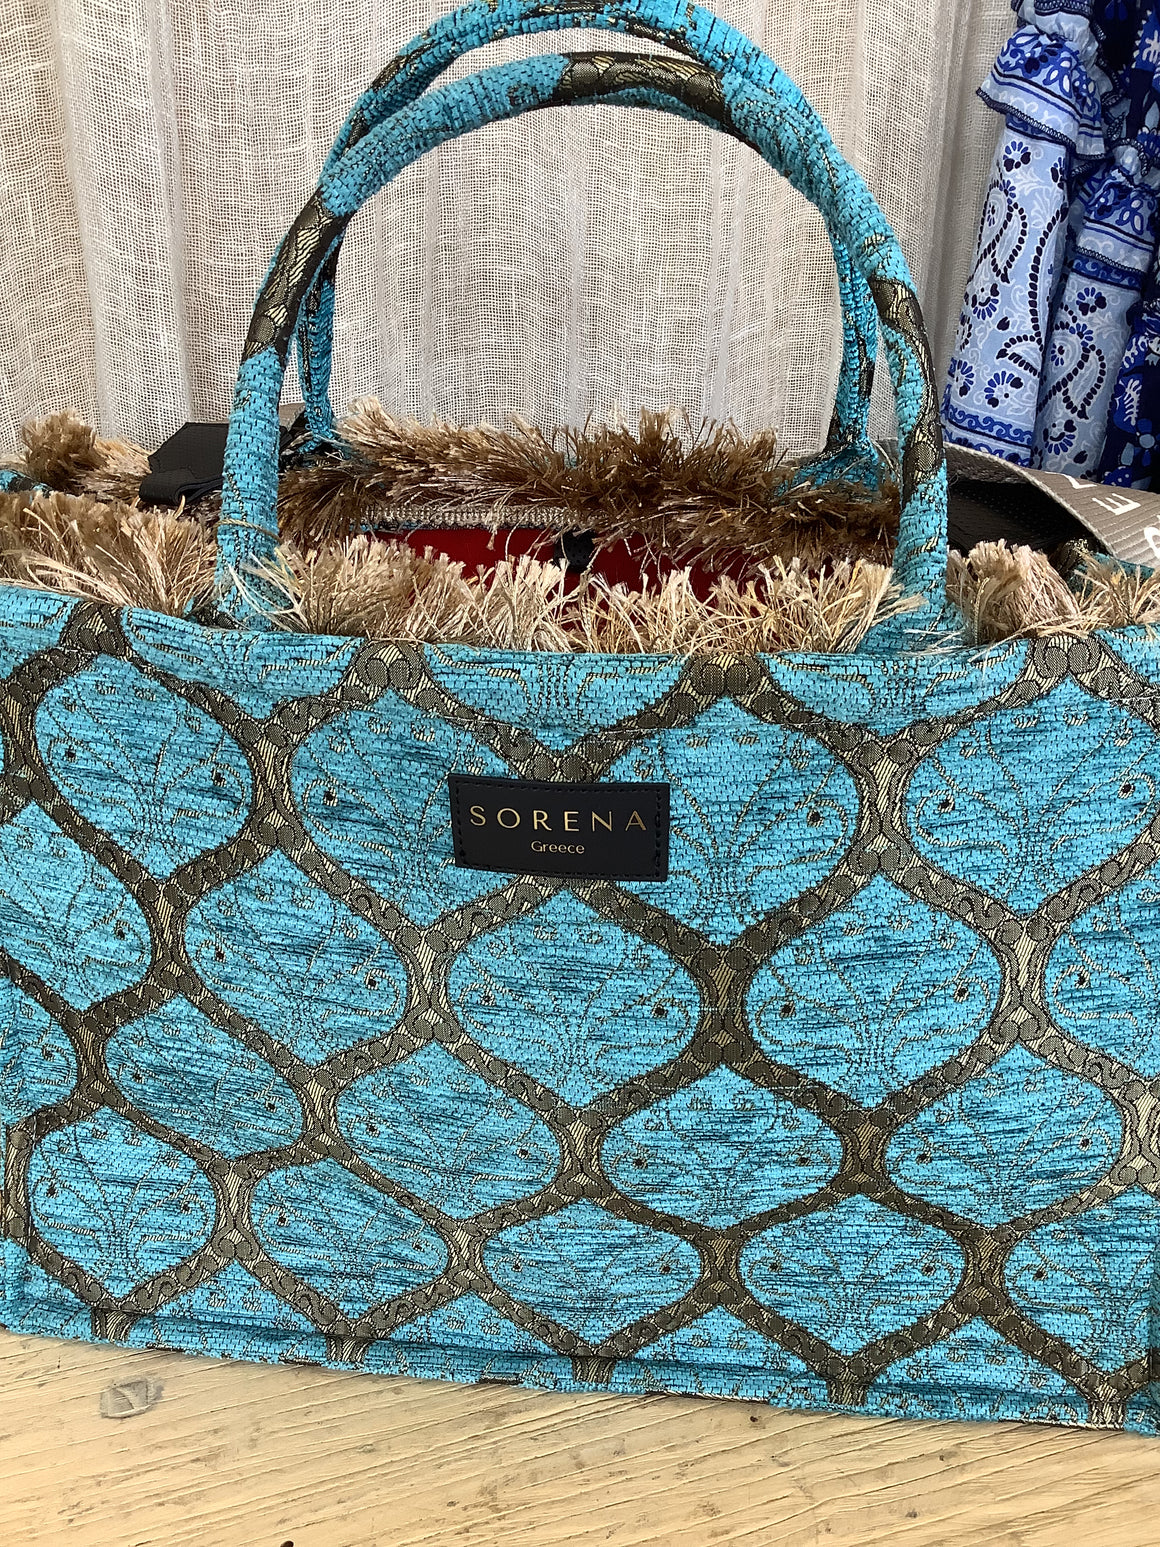 SORENA Tote Bag -Likno - Turquoise Motif